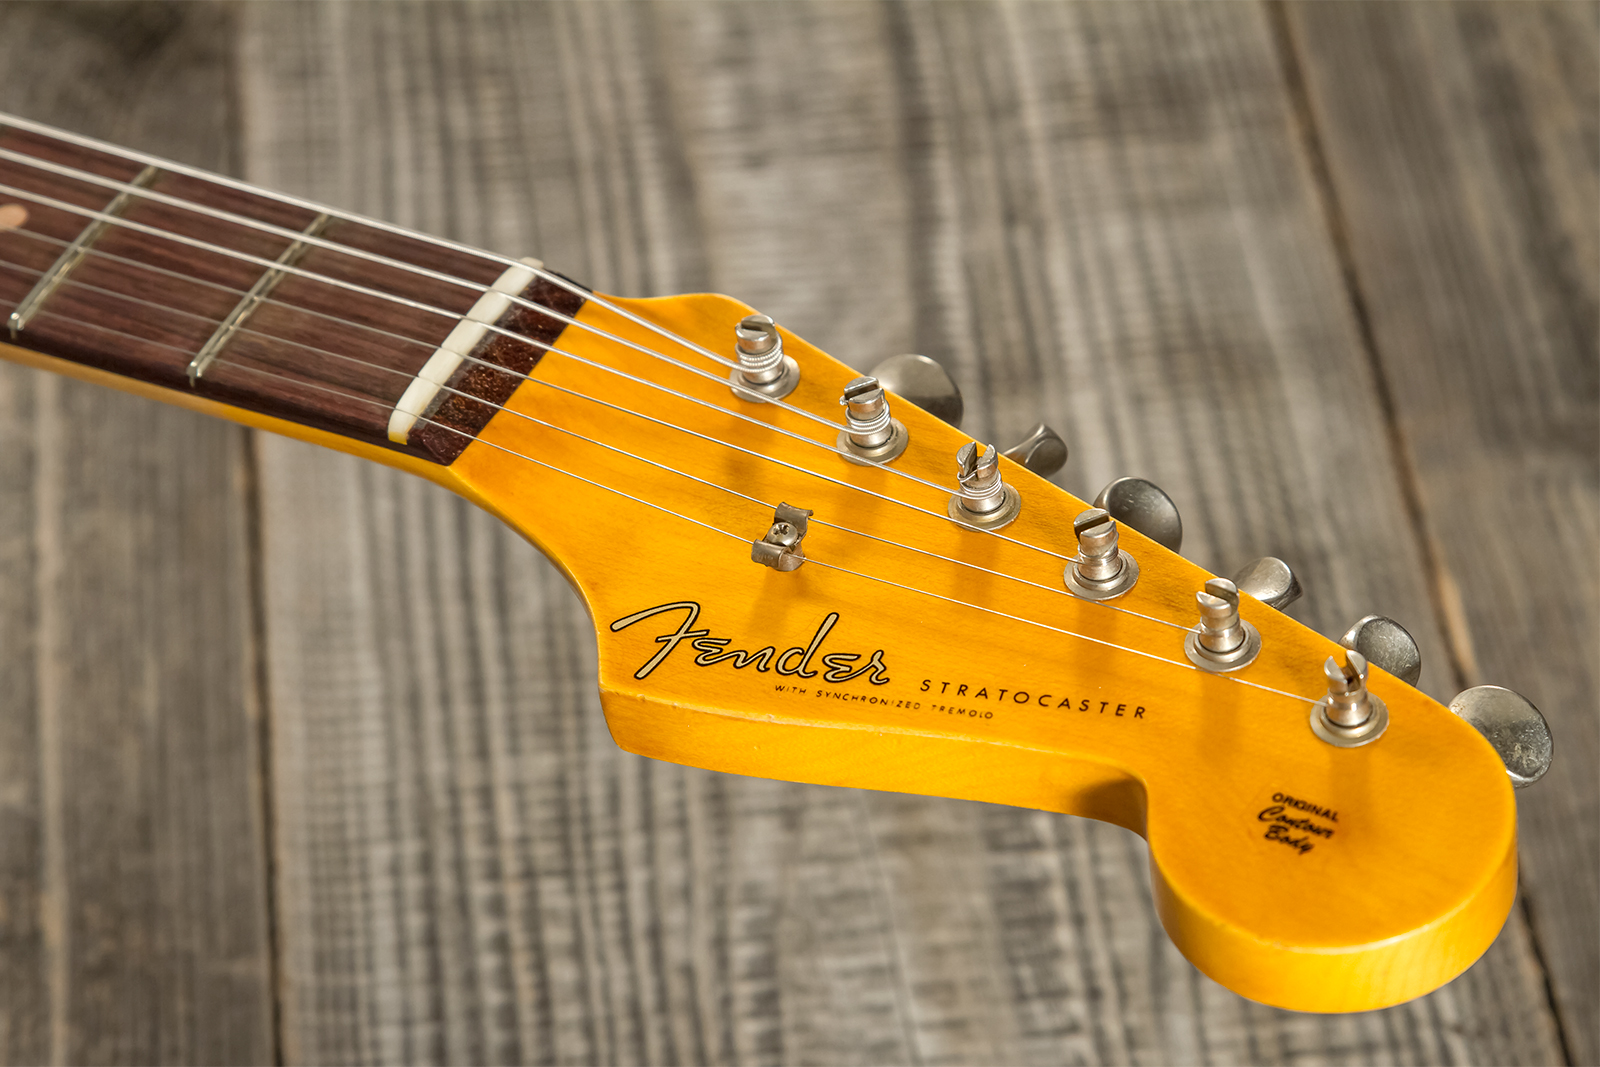 Fender Custom Shop Strat 1959 3s Trem Rw #cz570883 - Journeyman Relic Teal Green Metallic - Str shape electric guitar - Variation 6